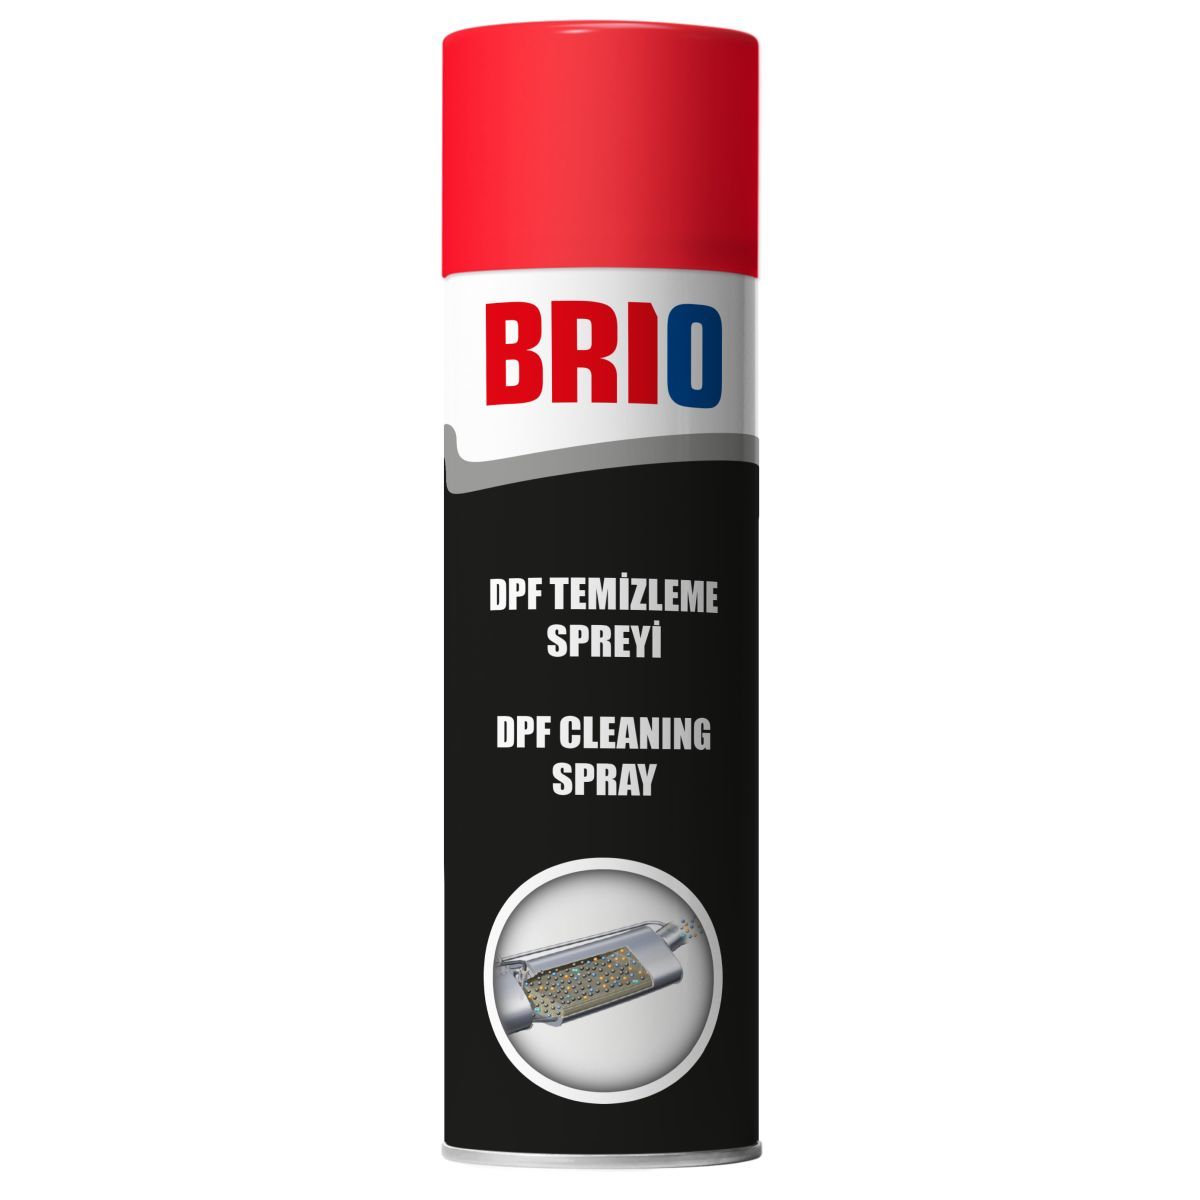 Brio DPF Dizel Partikül Filtre Temizleme Spreyi Sondalı 500Ml